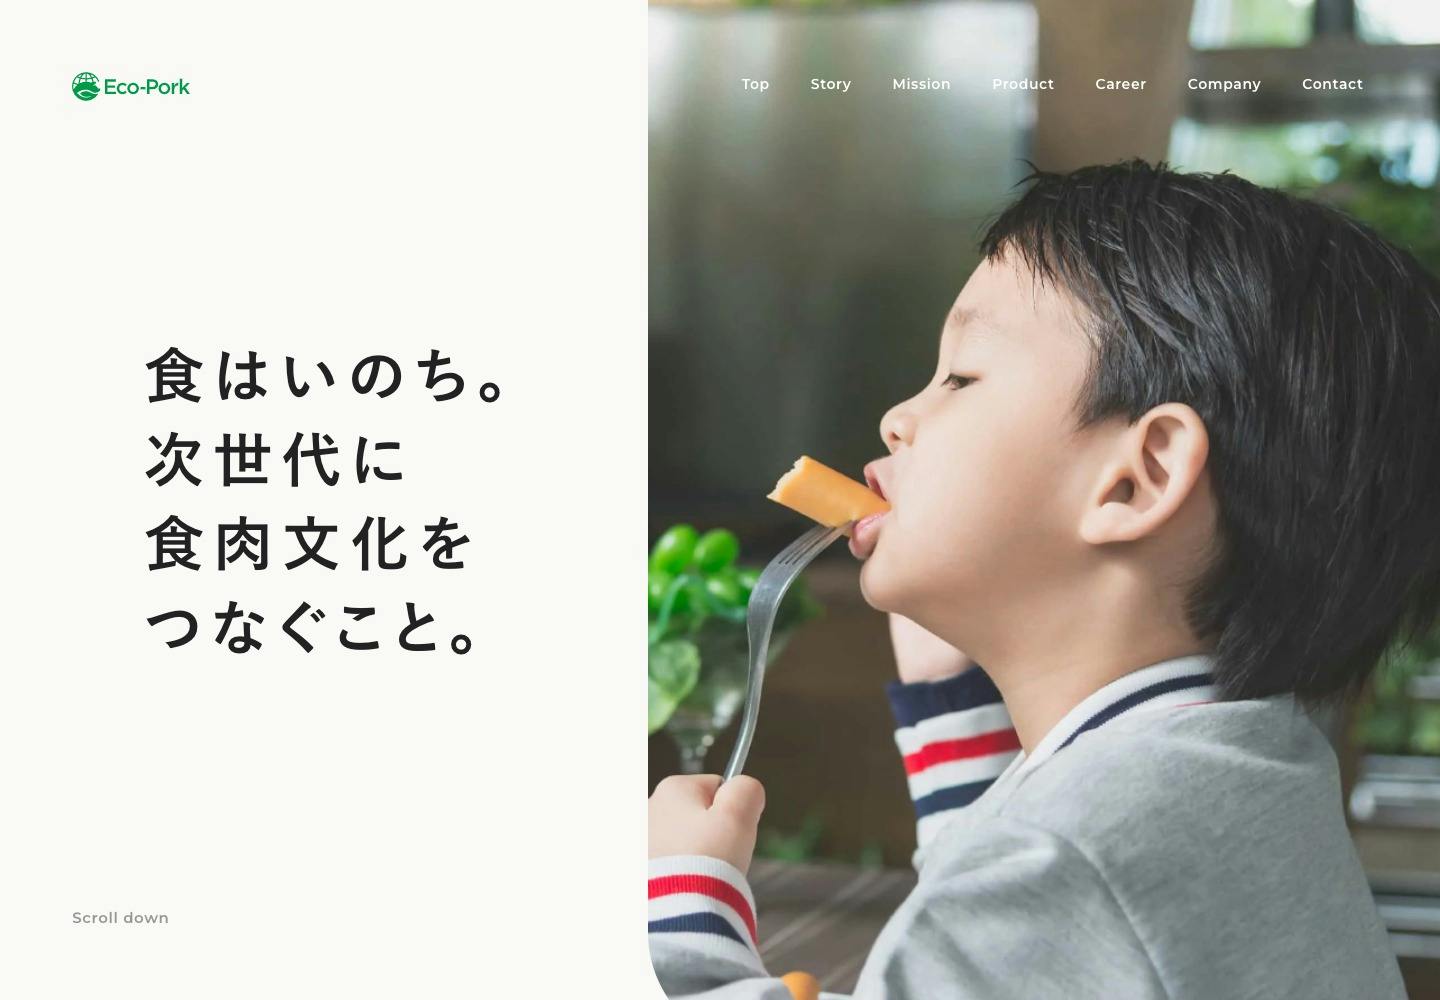 Cover Image for 株式会社Eco-Pork | Data Company for sutainable pork eco-system